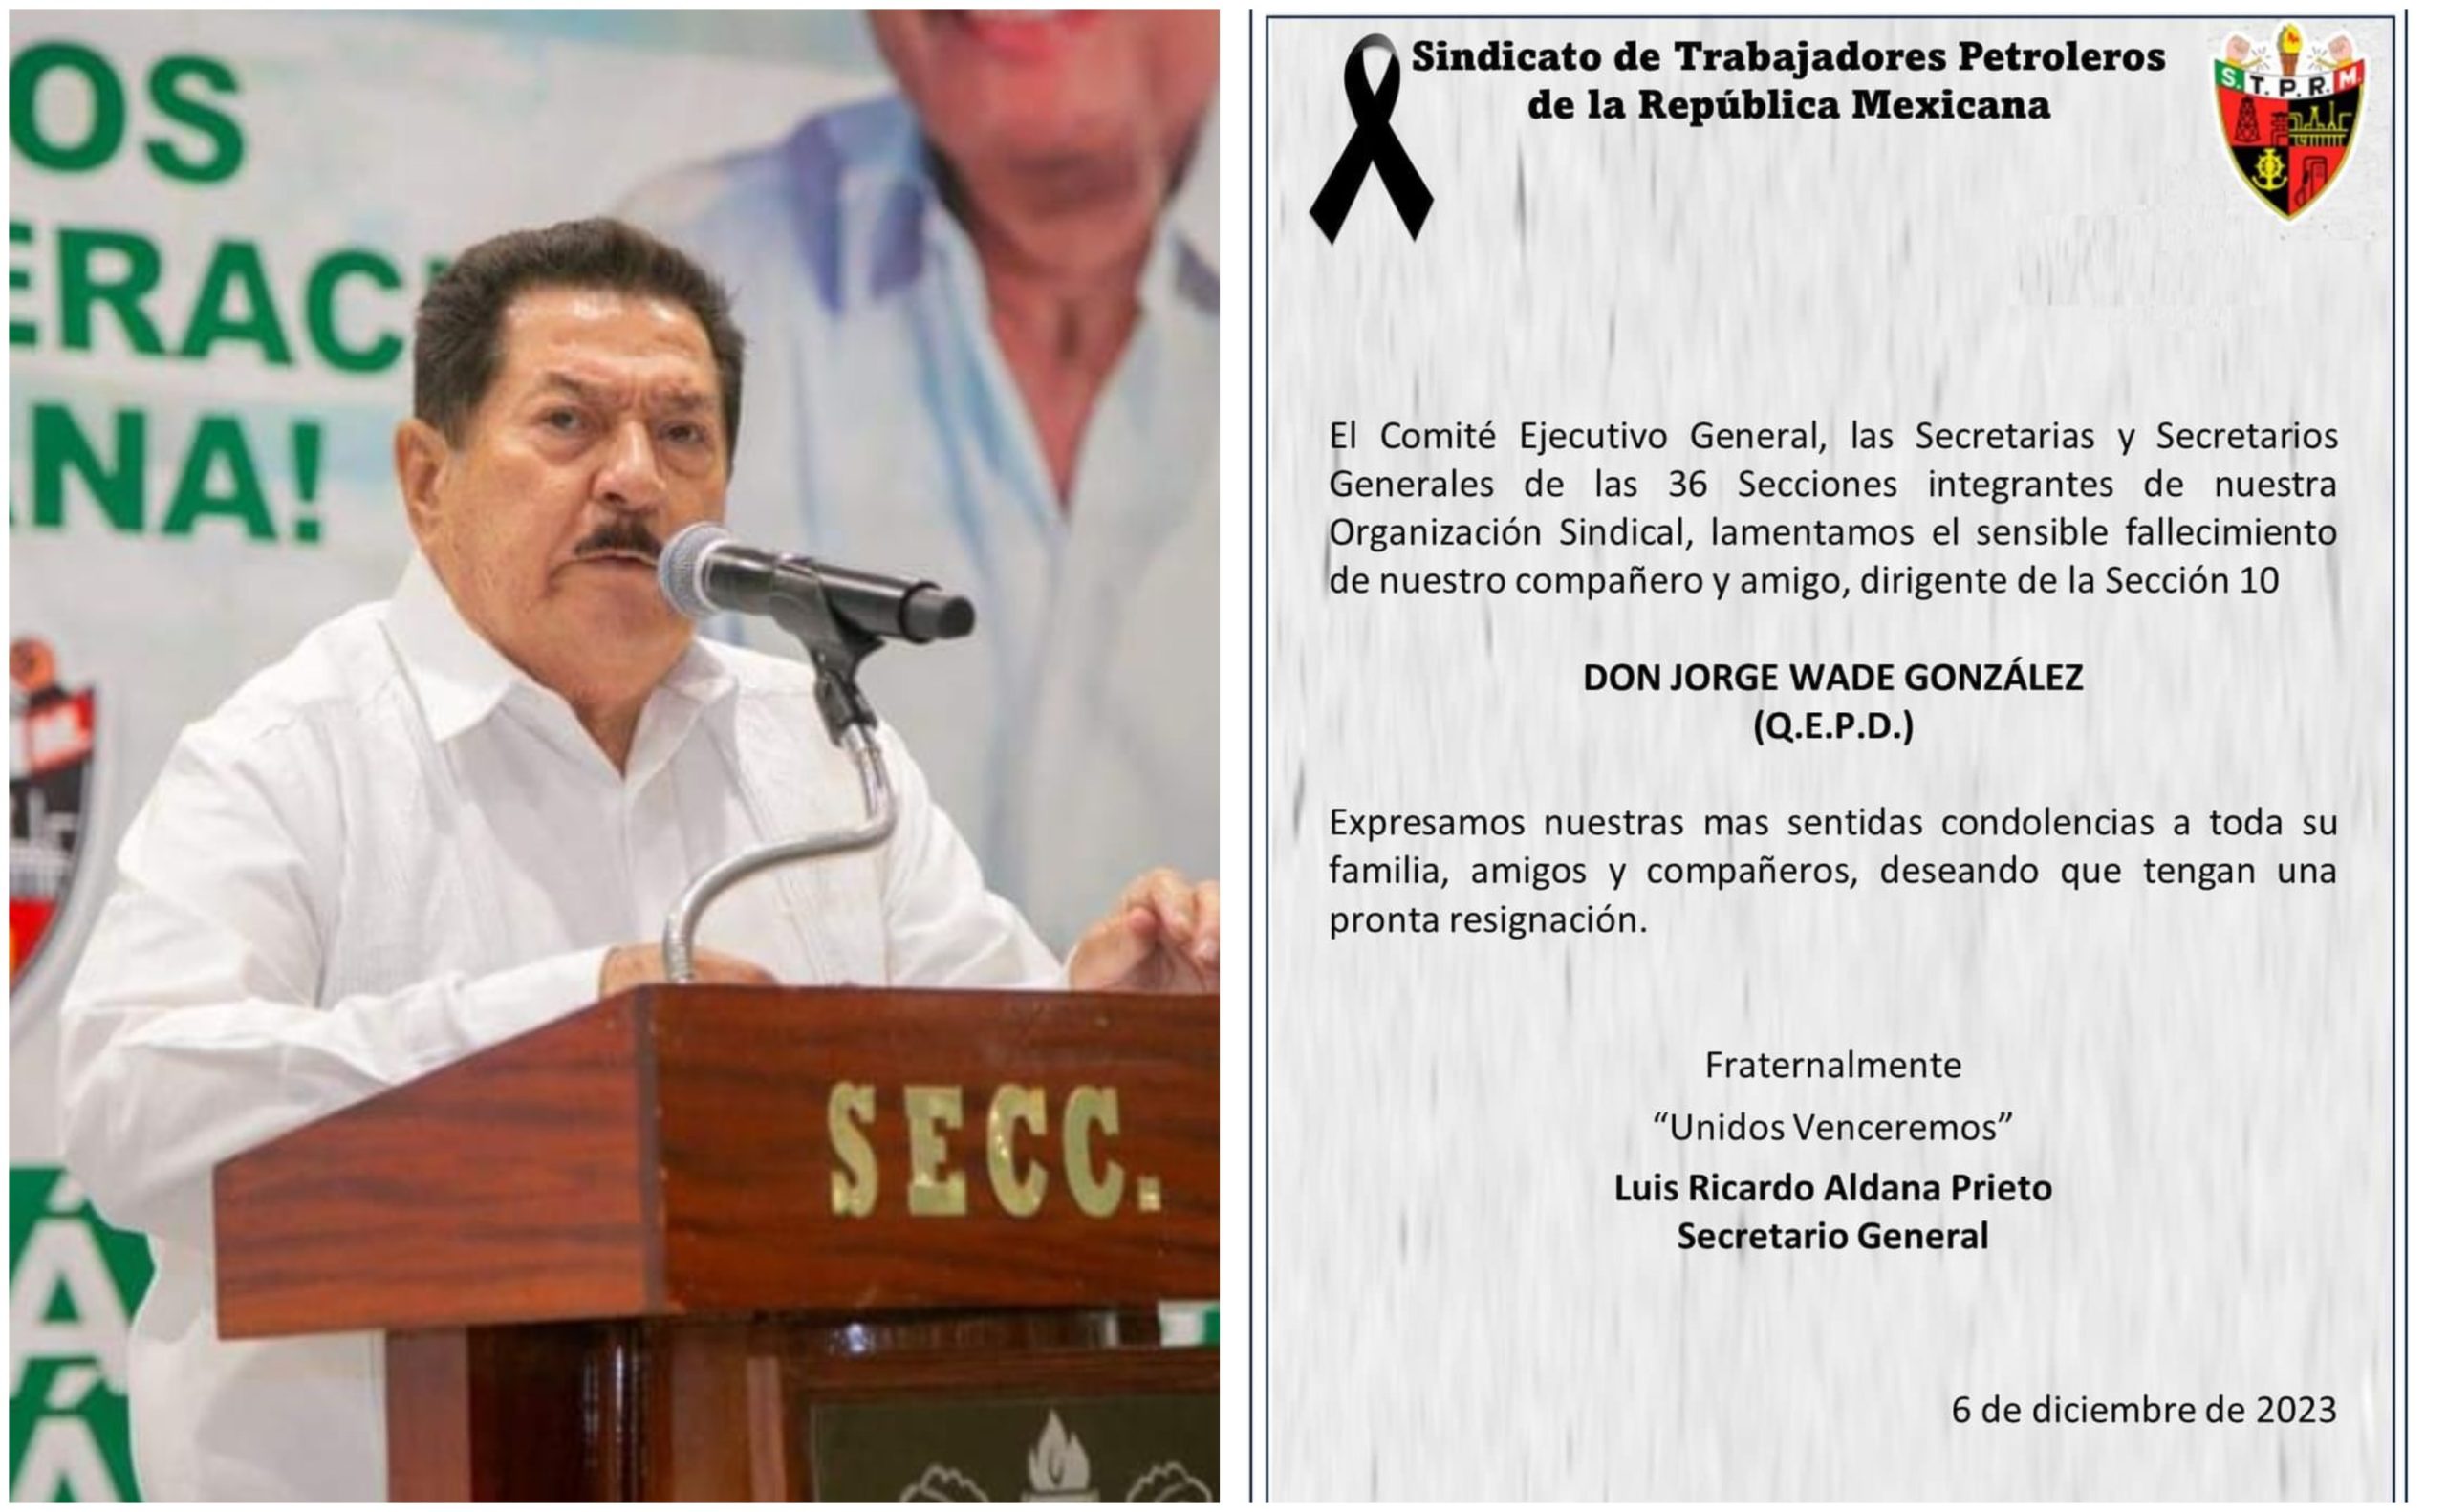 Fallece Jorge Wade González, exlíder sindical de Pemex y exalcalde de Mina